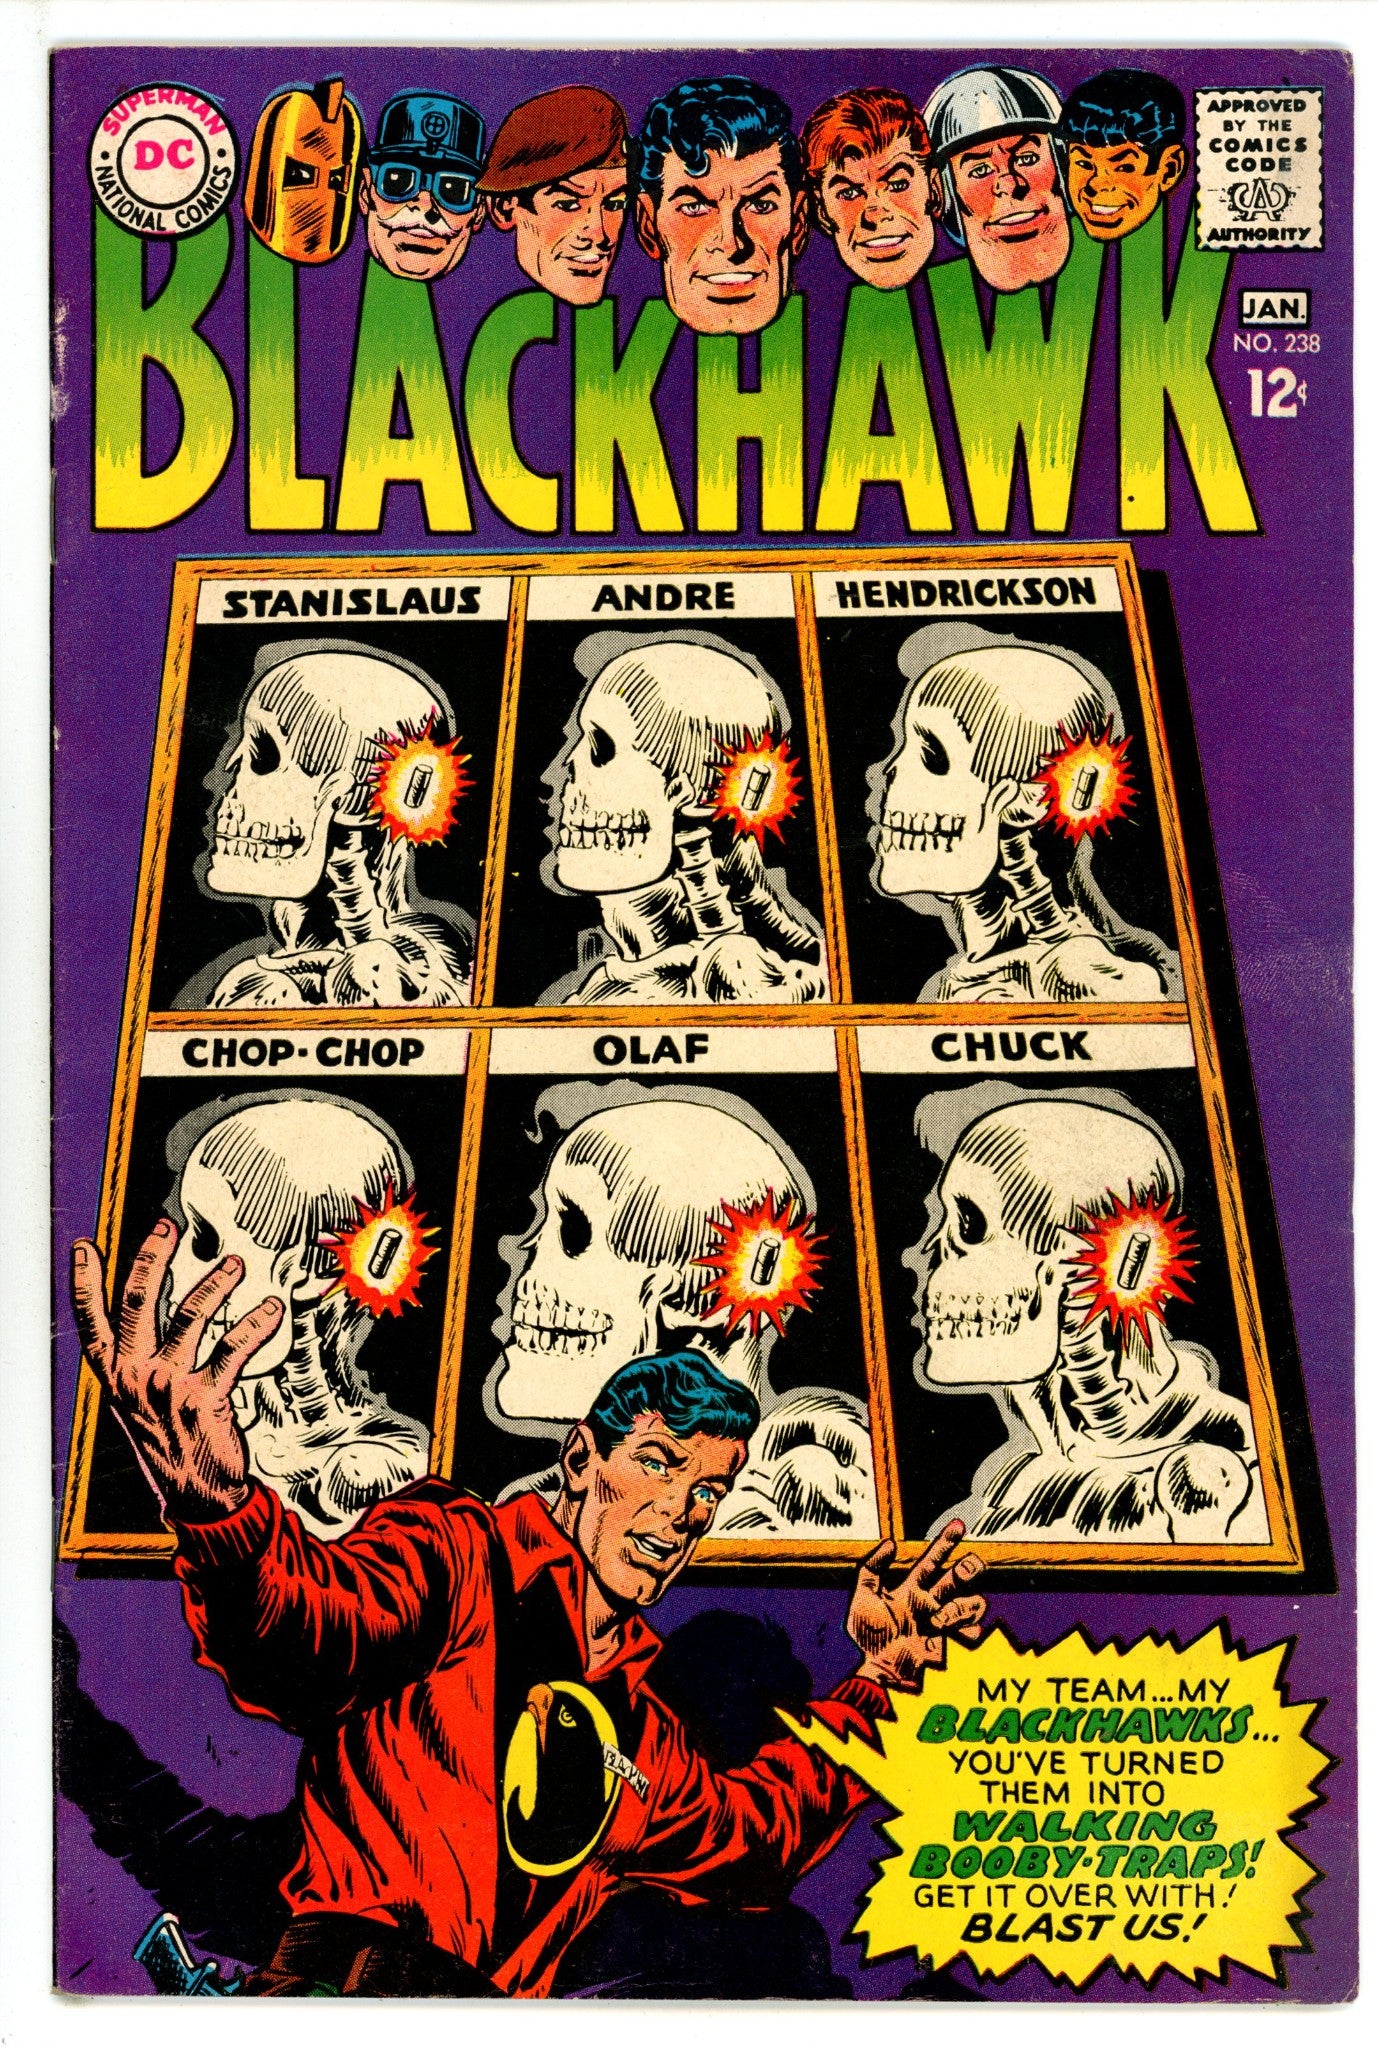 Blackhawk Vol 1 238 FN+ (6.5) (1967) 